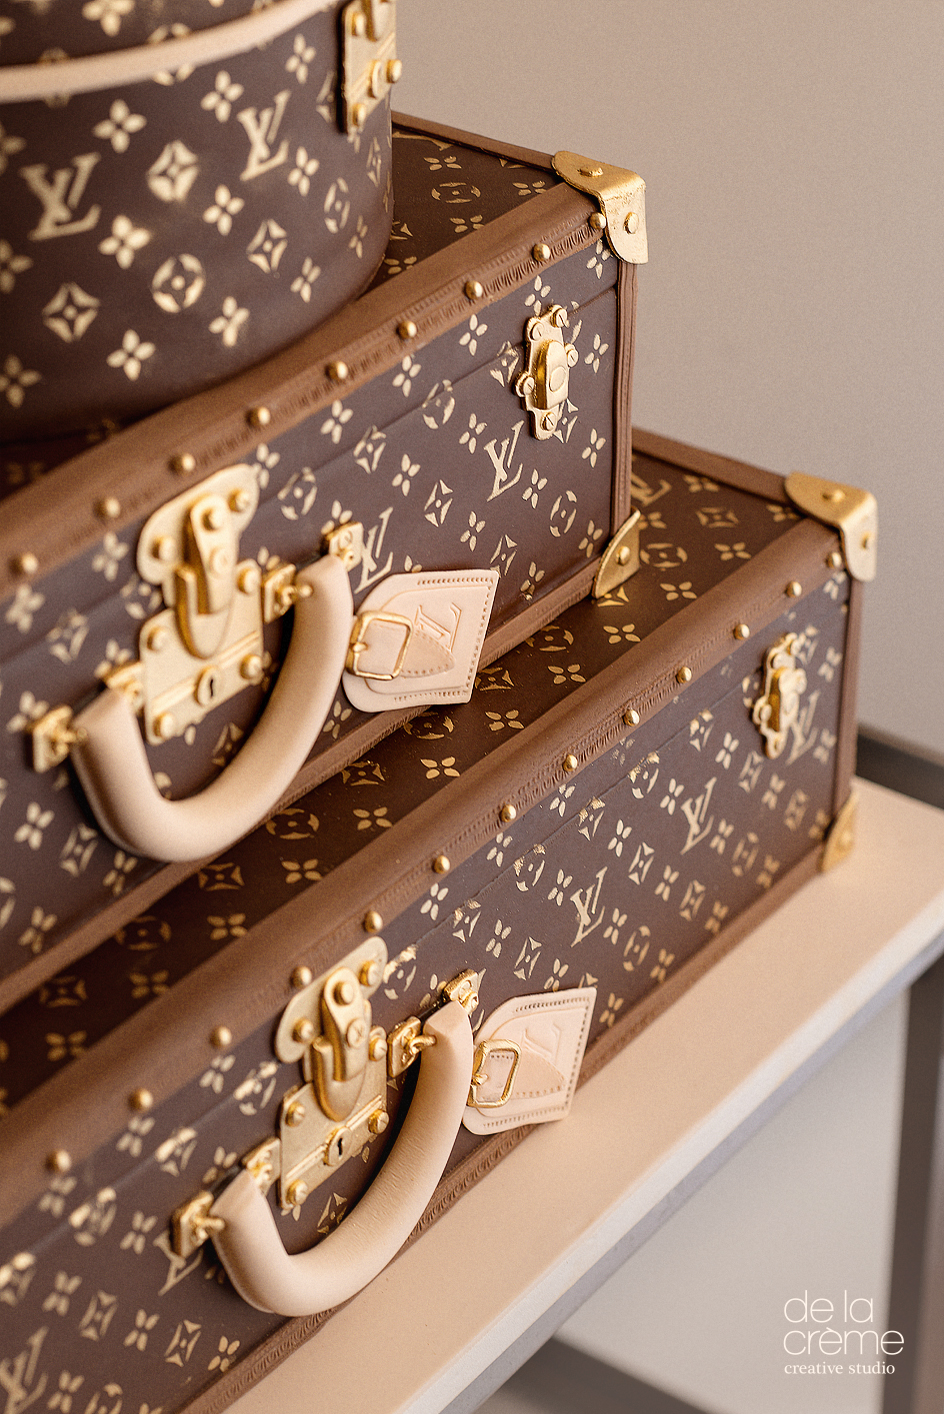 The process… Louis Vuitton Cake #cakesbychoice #cedarhillbaker